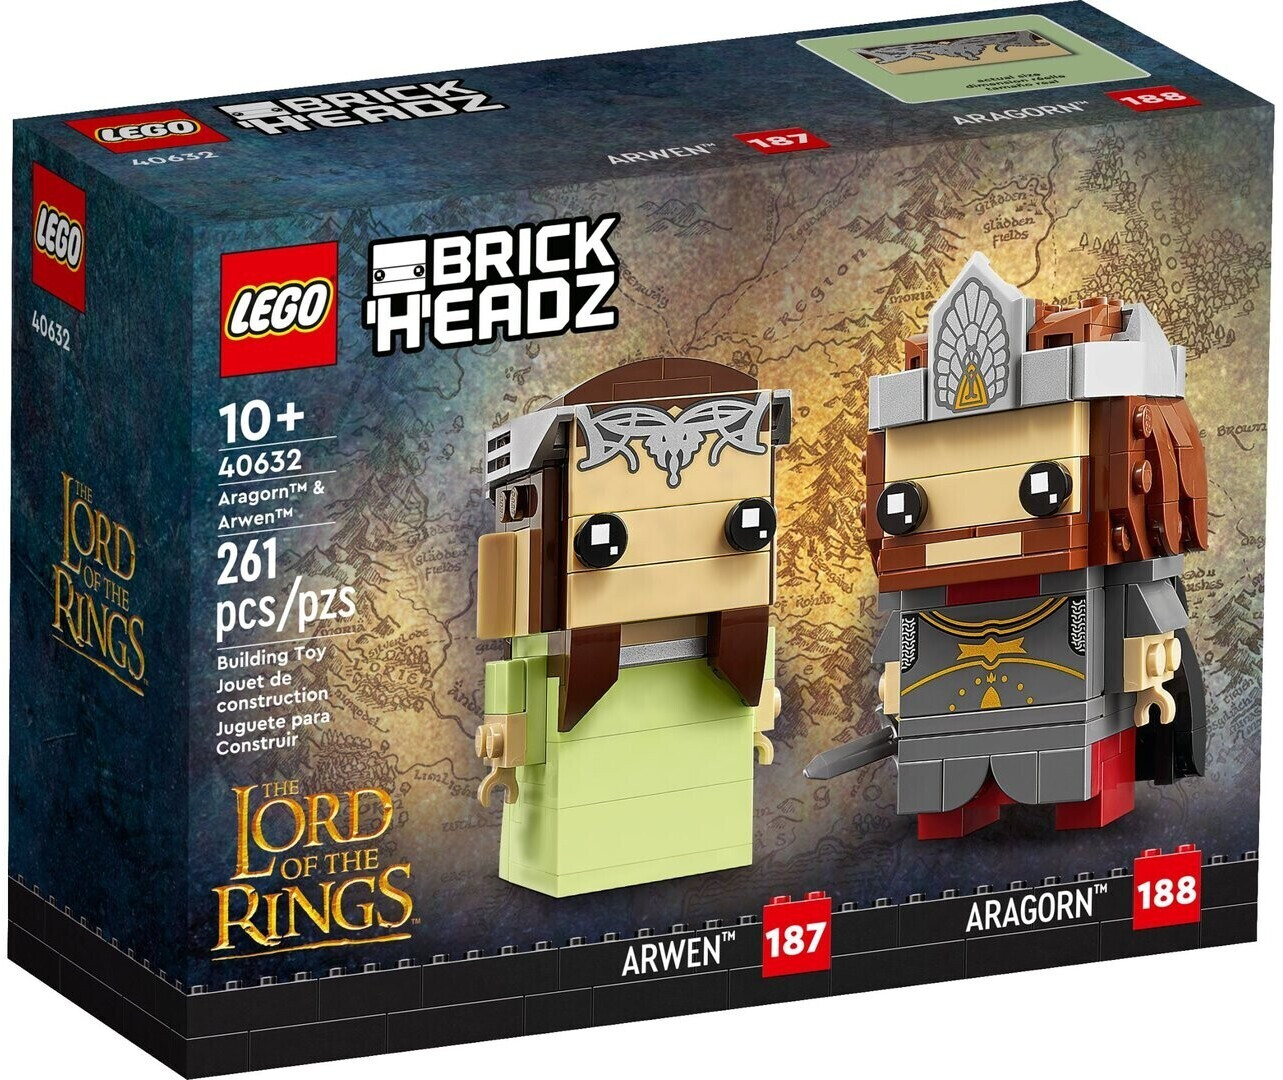 LEGO BrickHeadz Signore degli anelli: Aragorn & Arwen (40632) a € 24,99  (oggi)